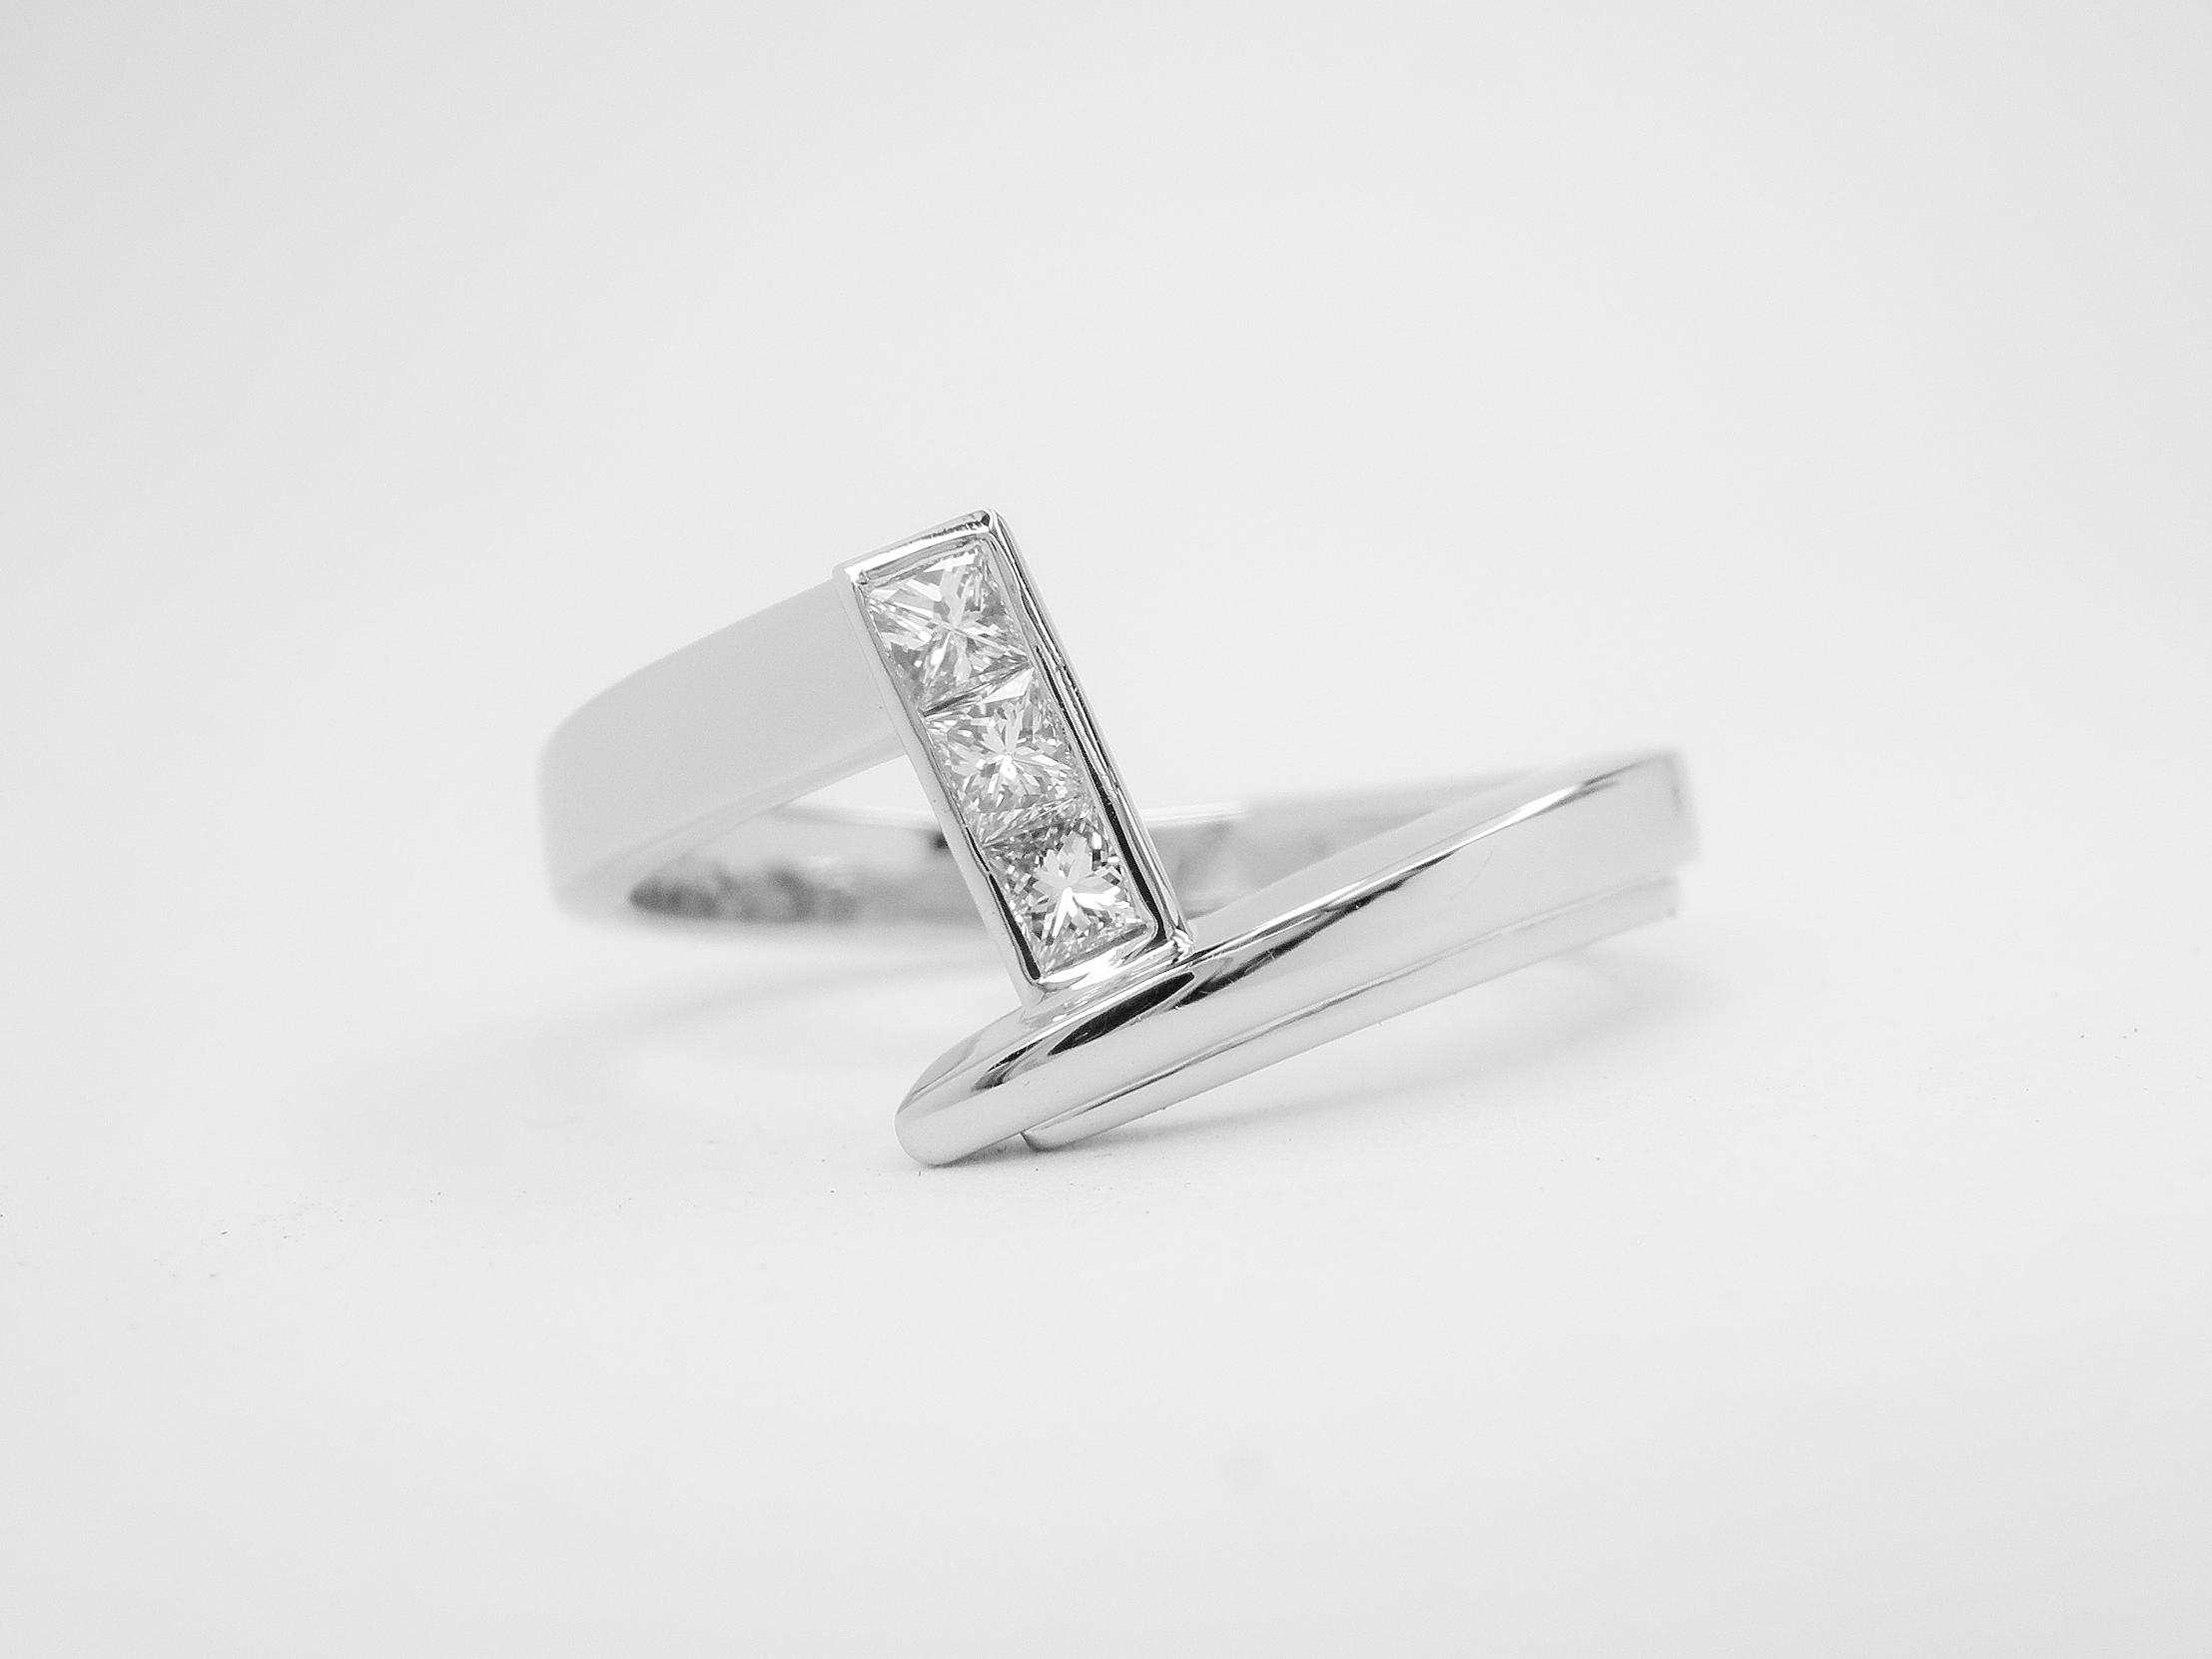 Zig-zag' platinum wedding ring shaped to fit a princess cut diamond cross-over engagement ring set with 3 princess cut diamonds.